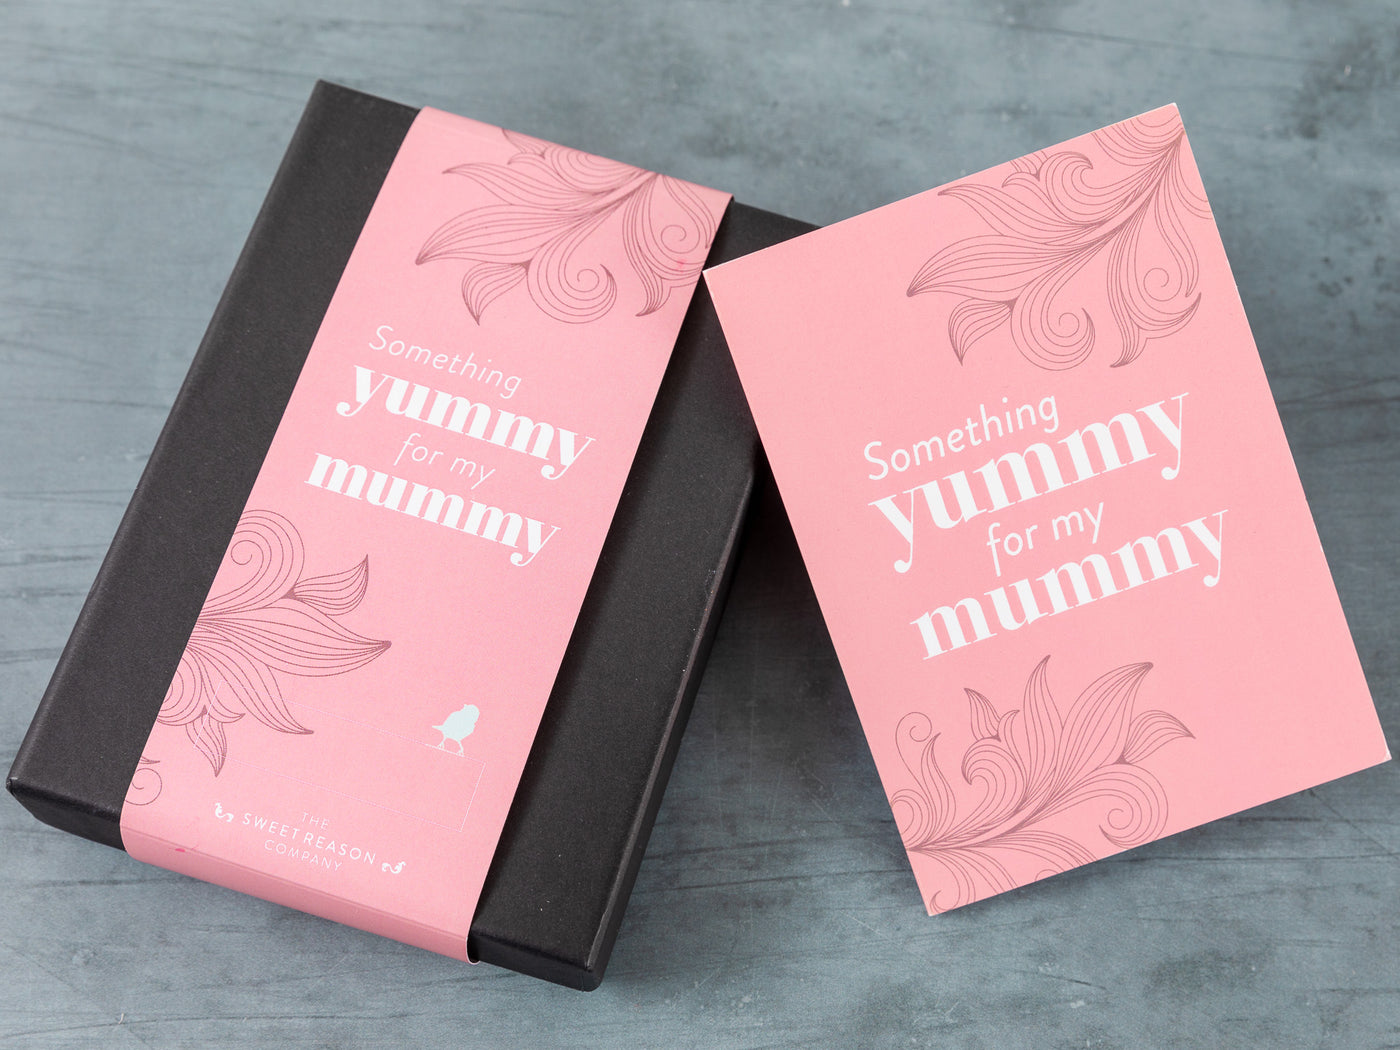 Yummy Mummy Gluten Free Luxury Brownie Gift